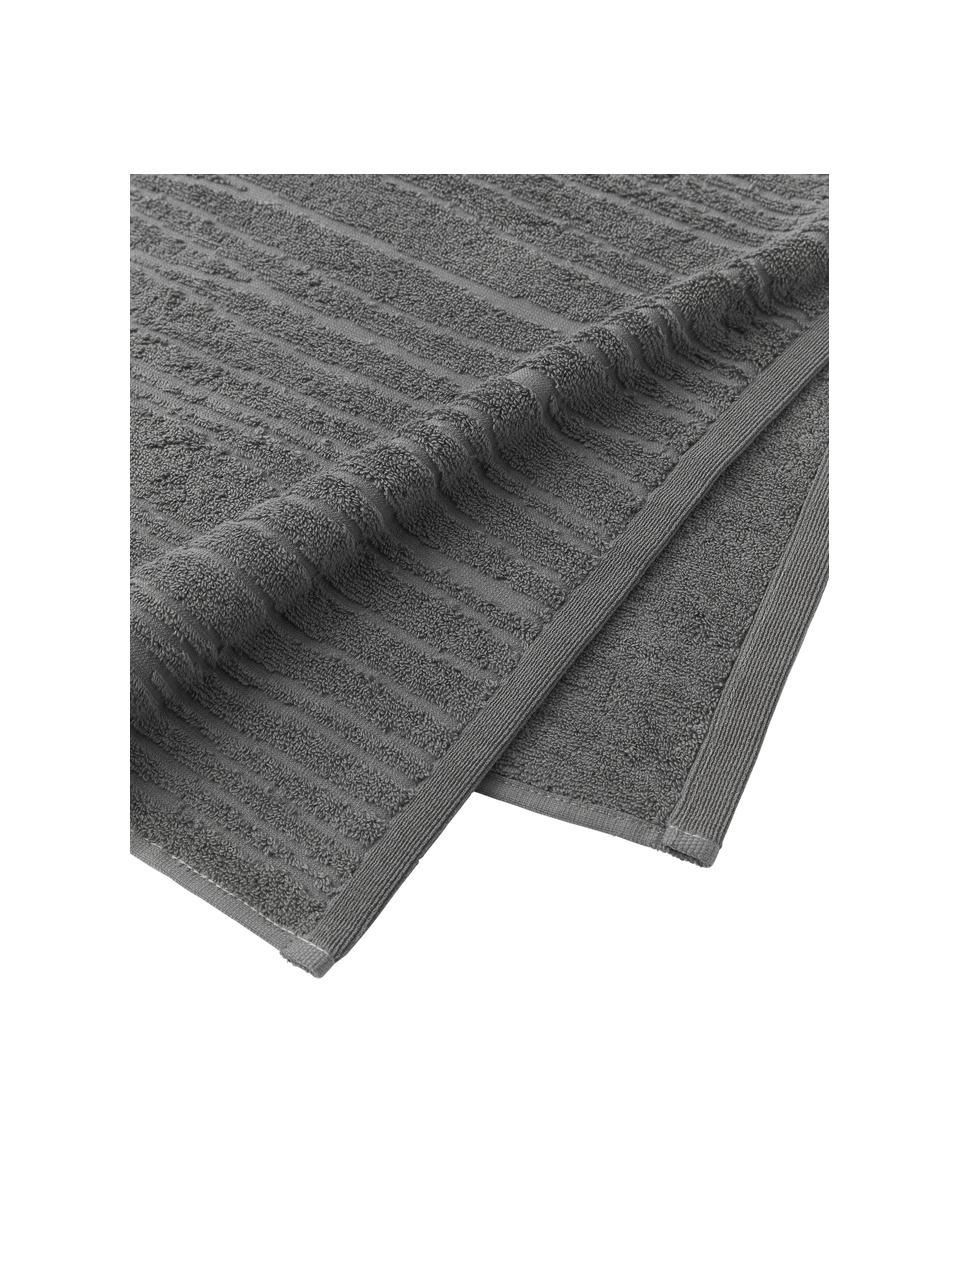 Asciugamano in cotone Audrina 2 pz, Grigio scuro, Asciugamani ospiti XS, larg. 30 x lung. 50 cm